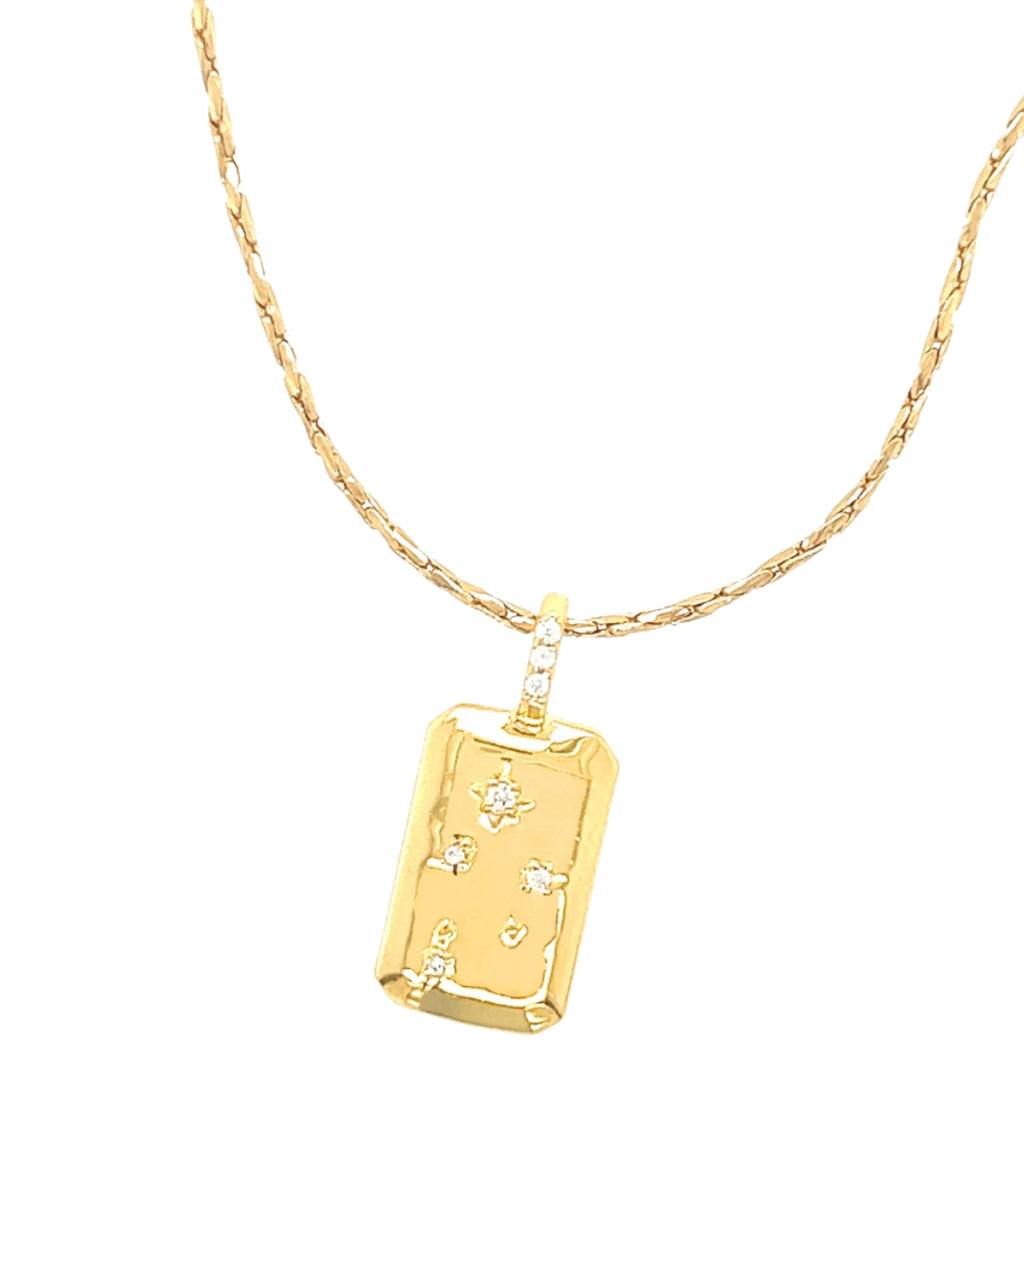 Gold Libra Constellation Zodiac Pendant on a Gold Necklace Chain